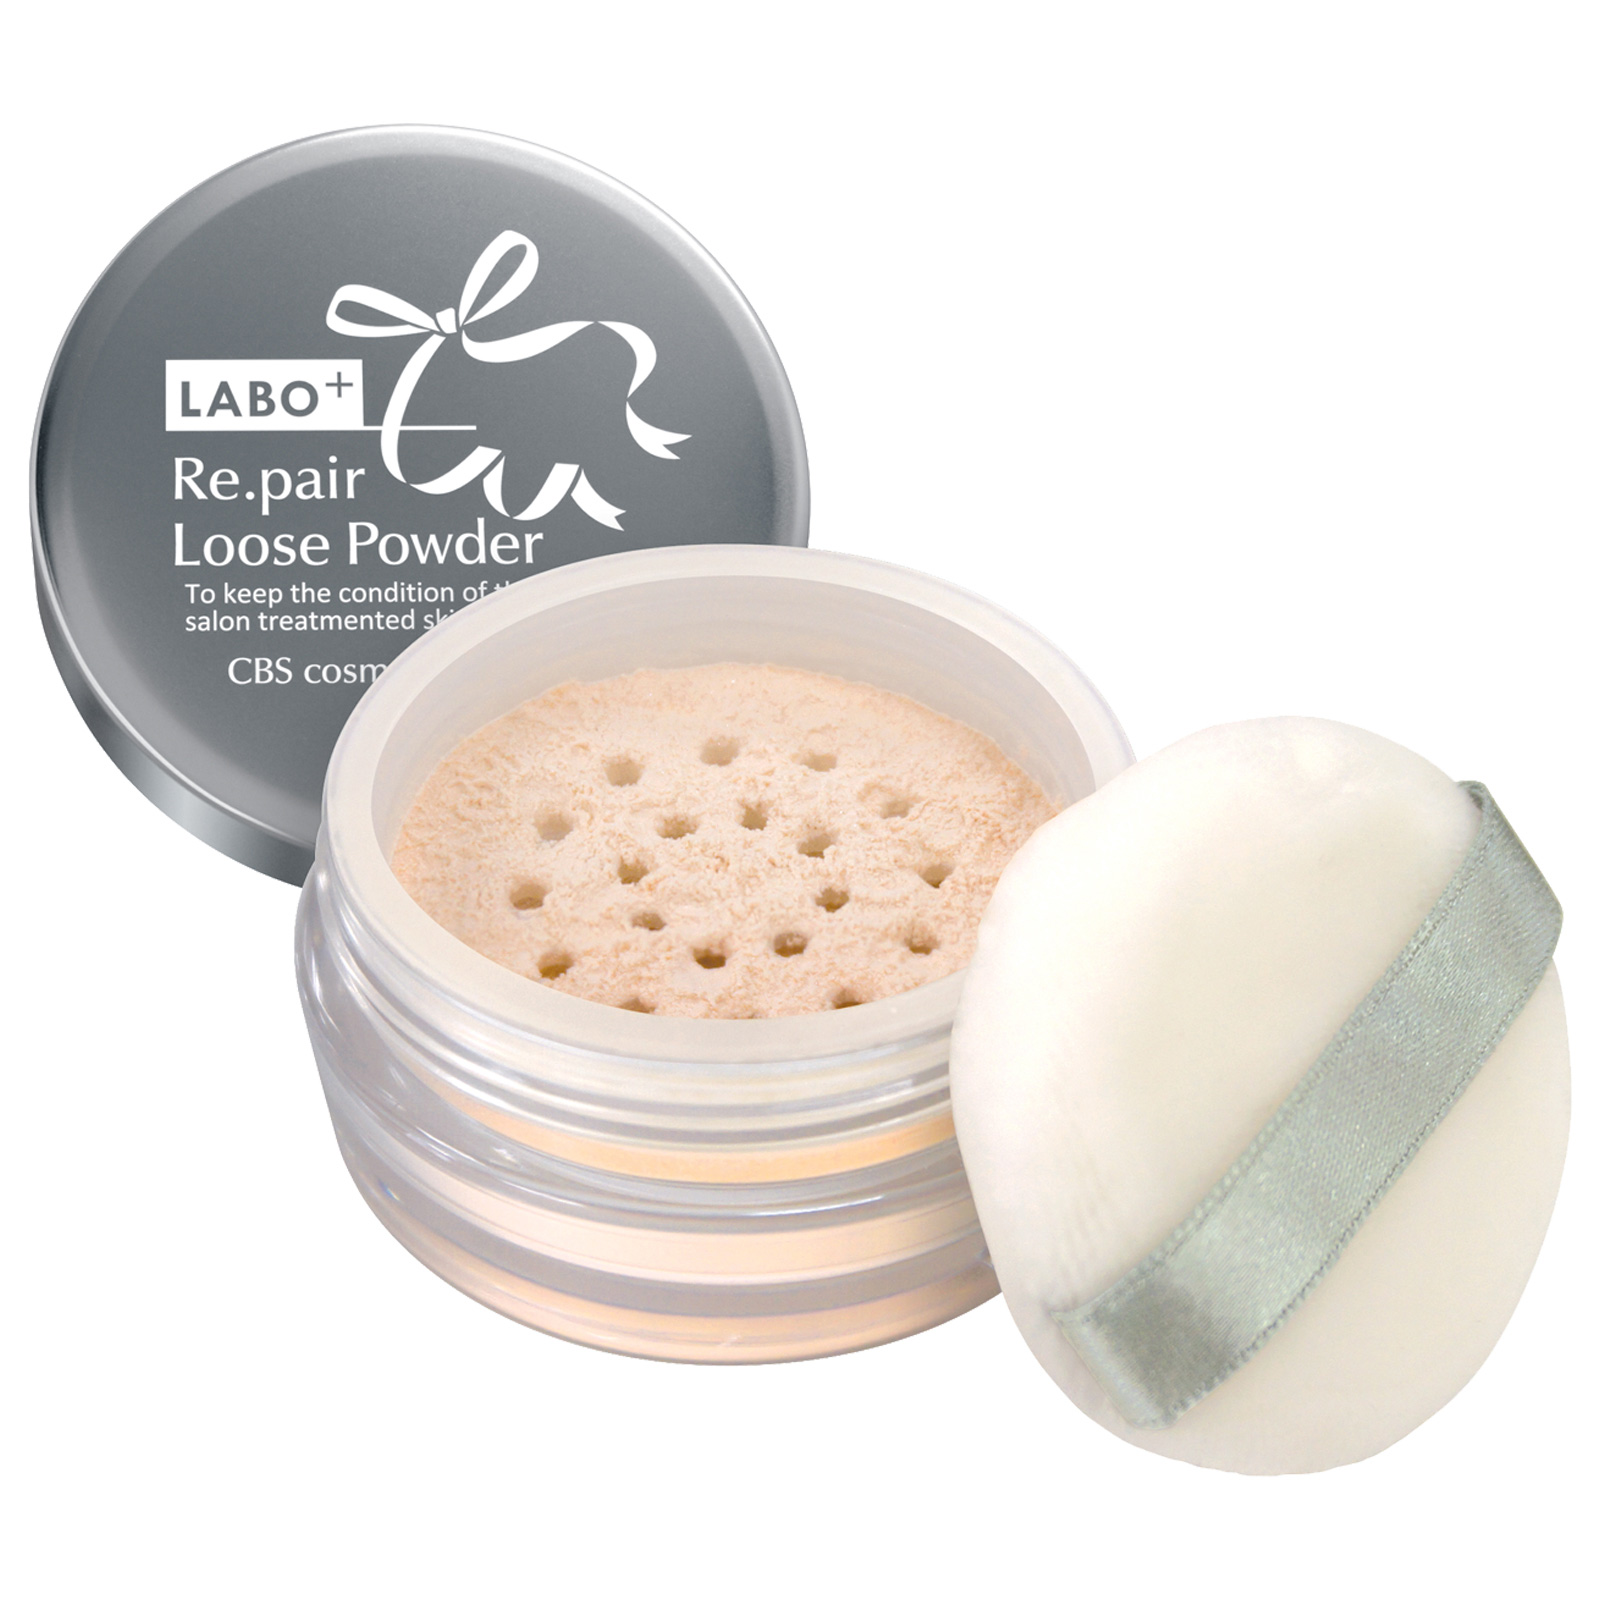 CBS Cosmetics LABO+ Re.pair Loose Powder. Восстанавливающая рассыпчатая пудра Лабо+, 5 г